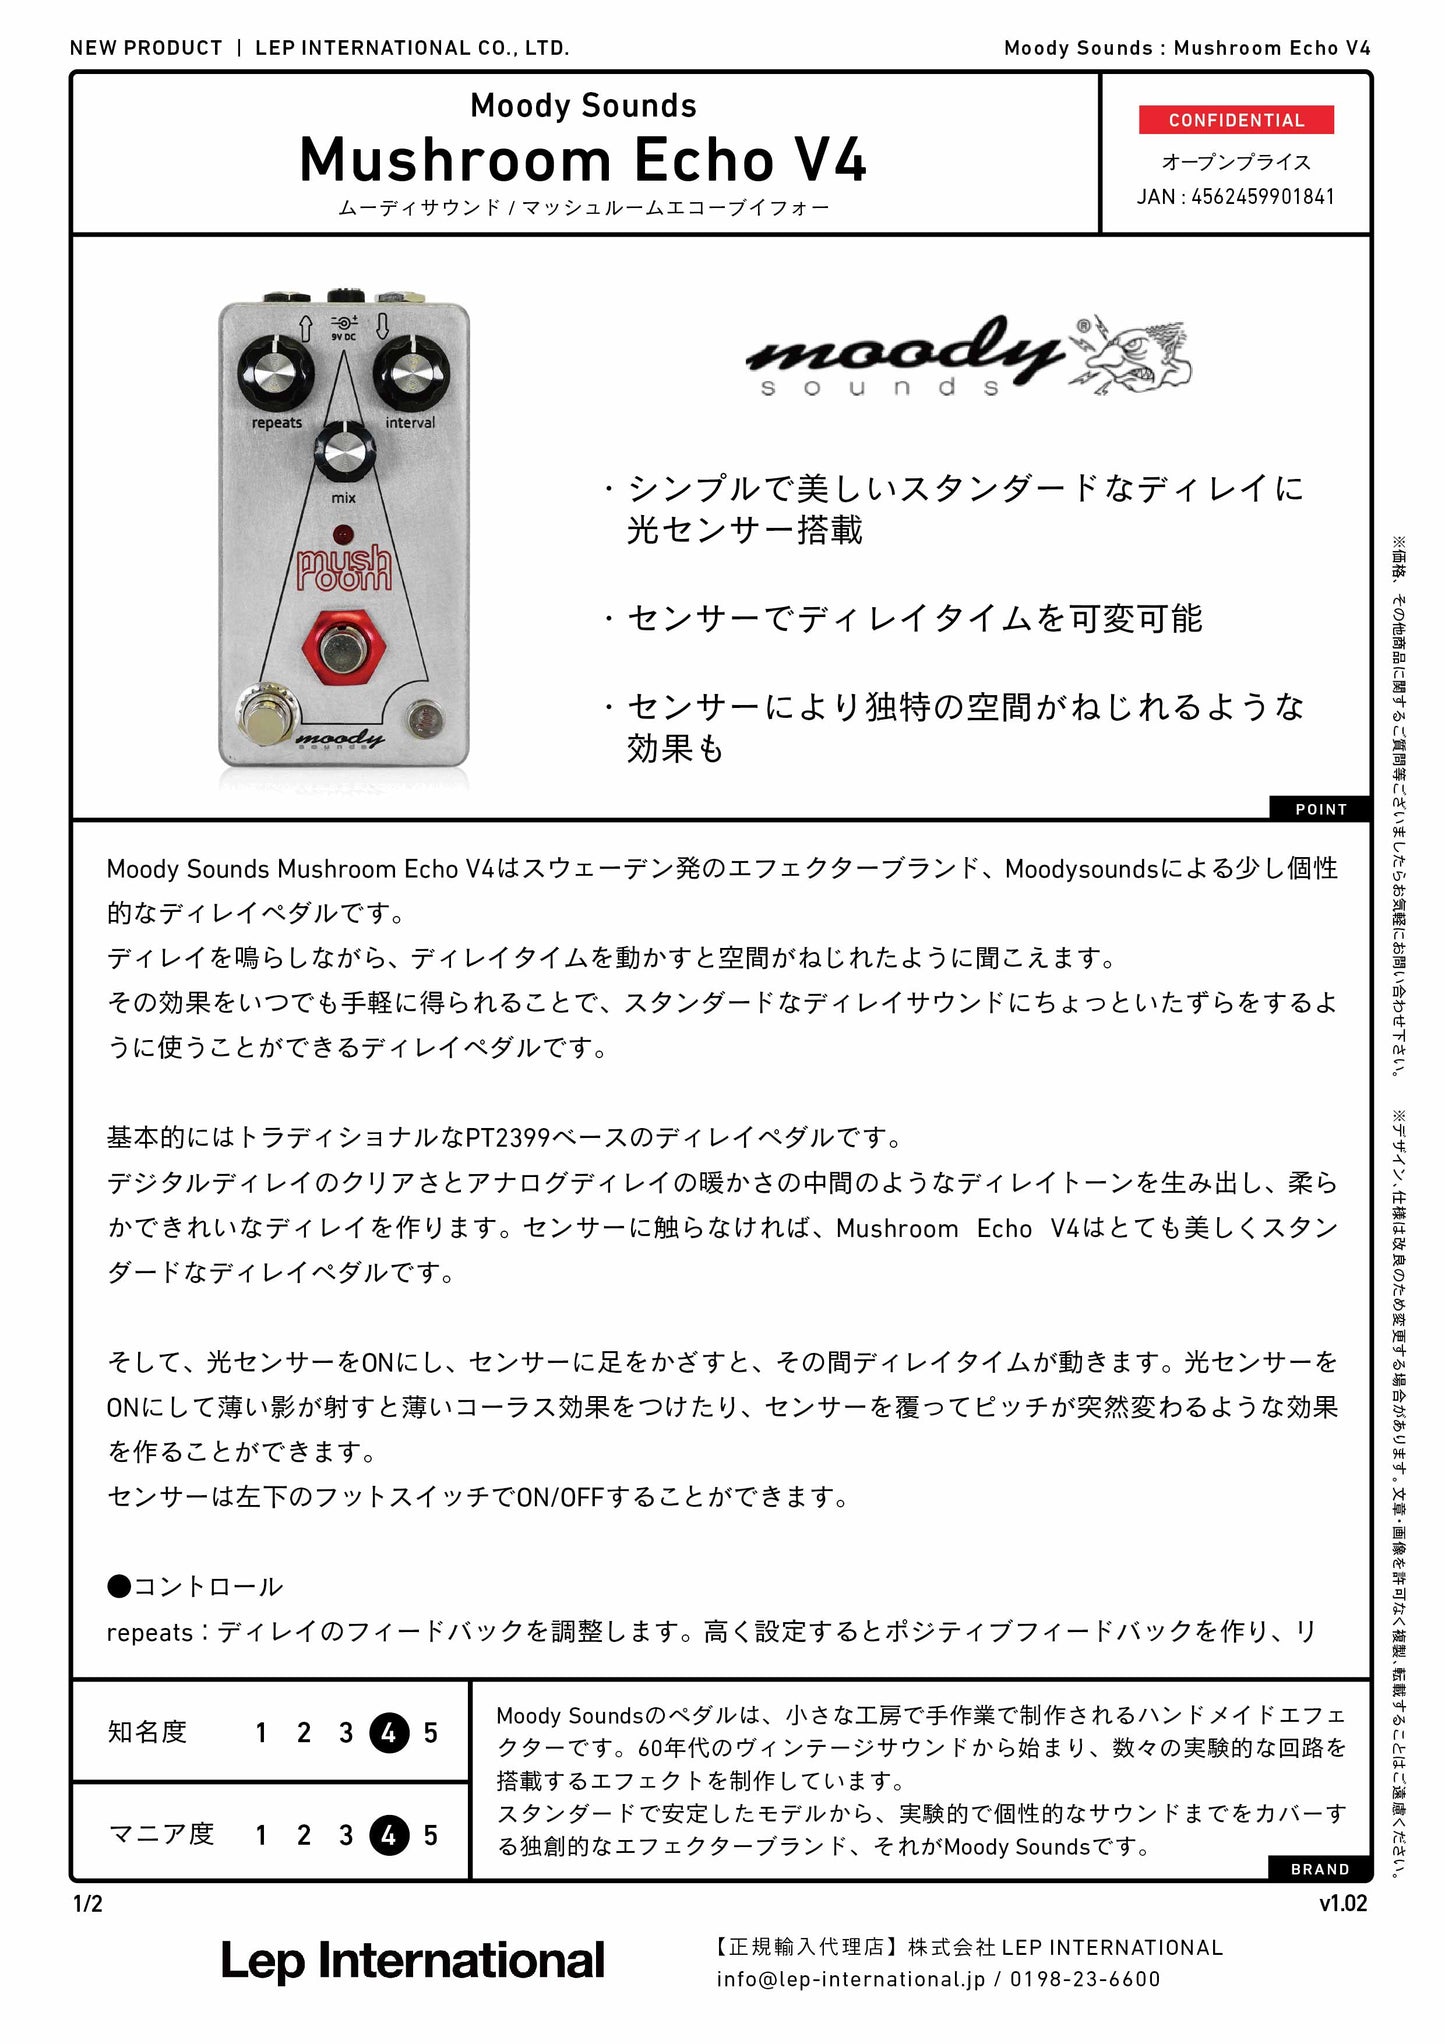 Moody Sounds/Mushroom Echo V4